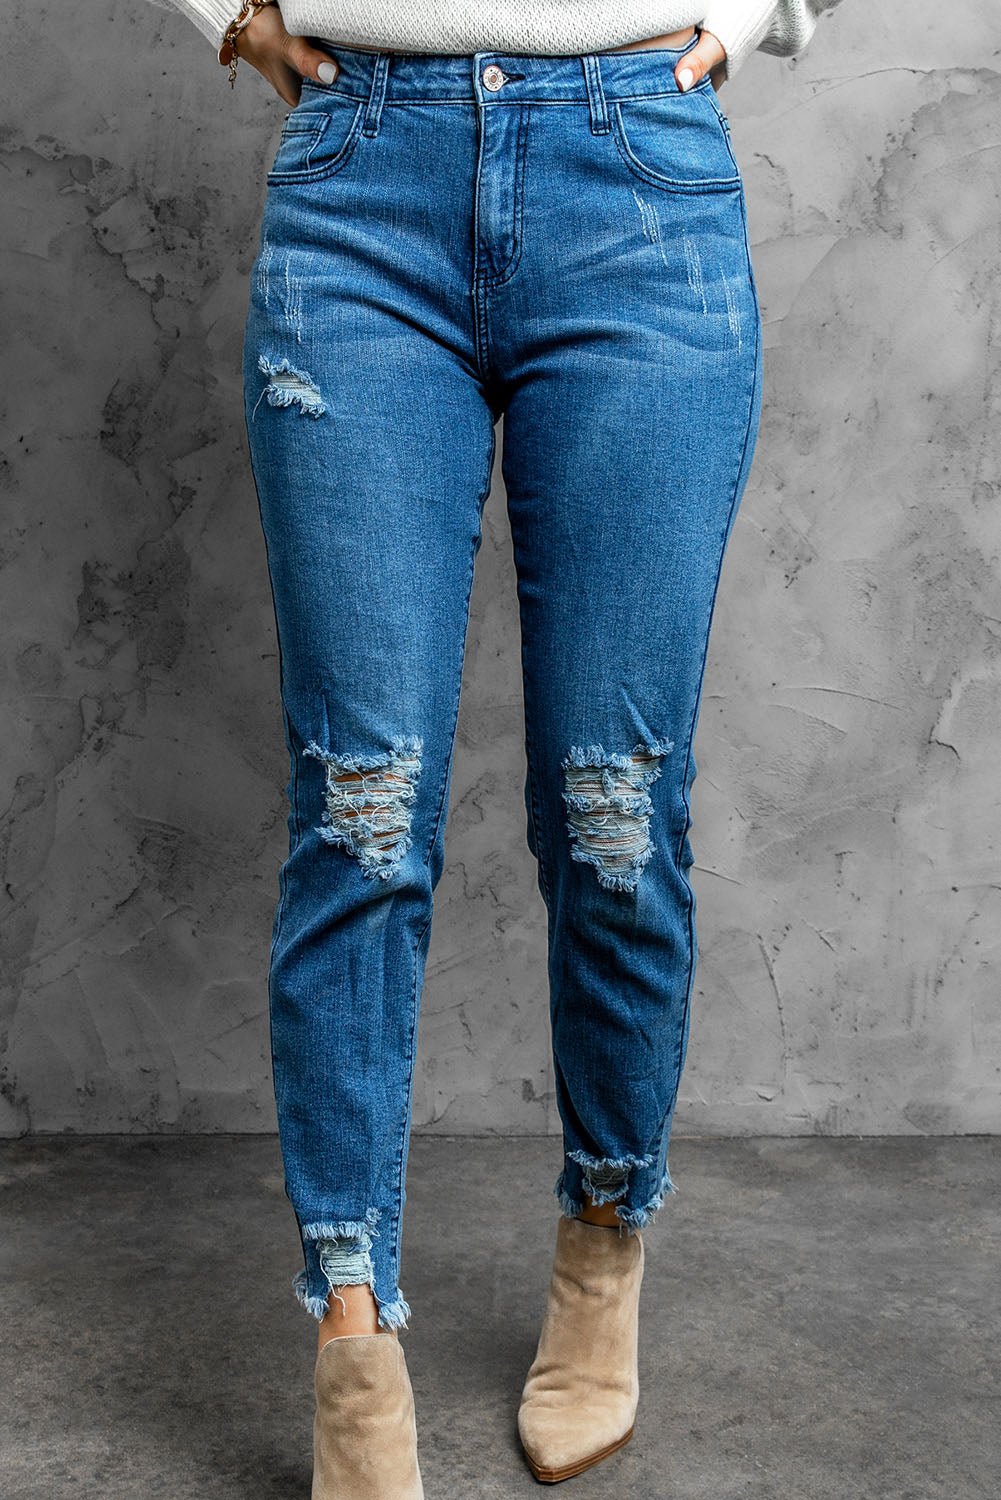 Kristin Distressed Cropped Jeans - Jeans Tangerine Goddess Medium / 4